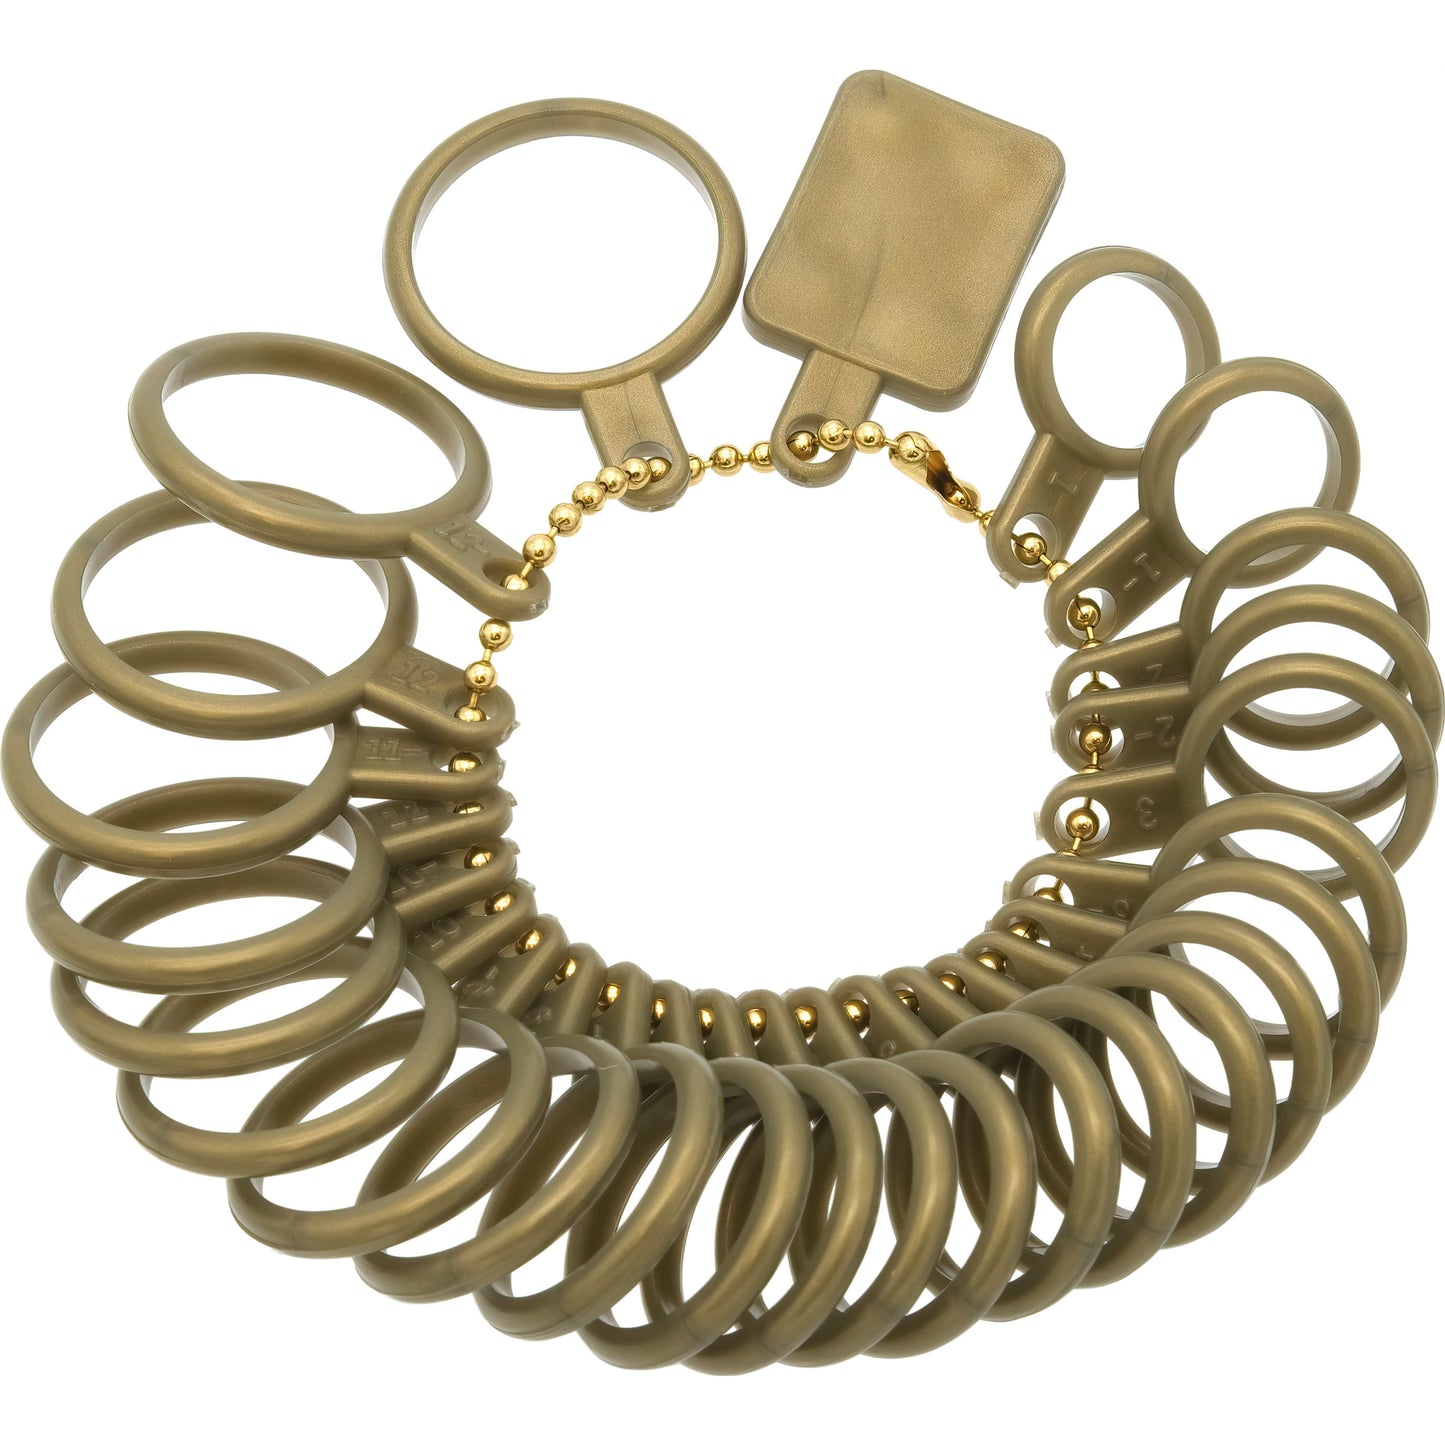 2 Finger Gauges Ring Sizers Plastic Sizes 1-13 Metal Sizes 1-15 Jewelers Kit